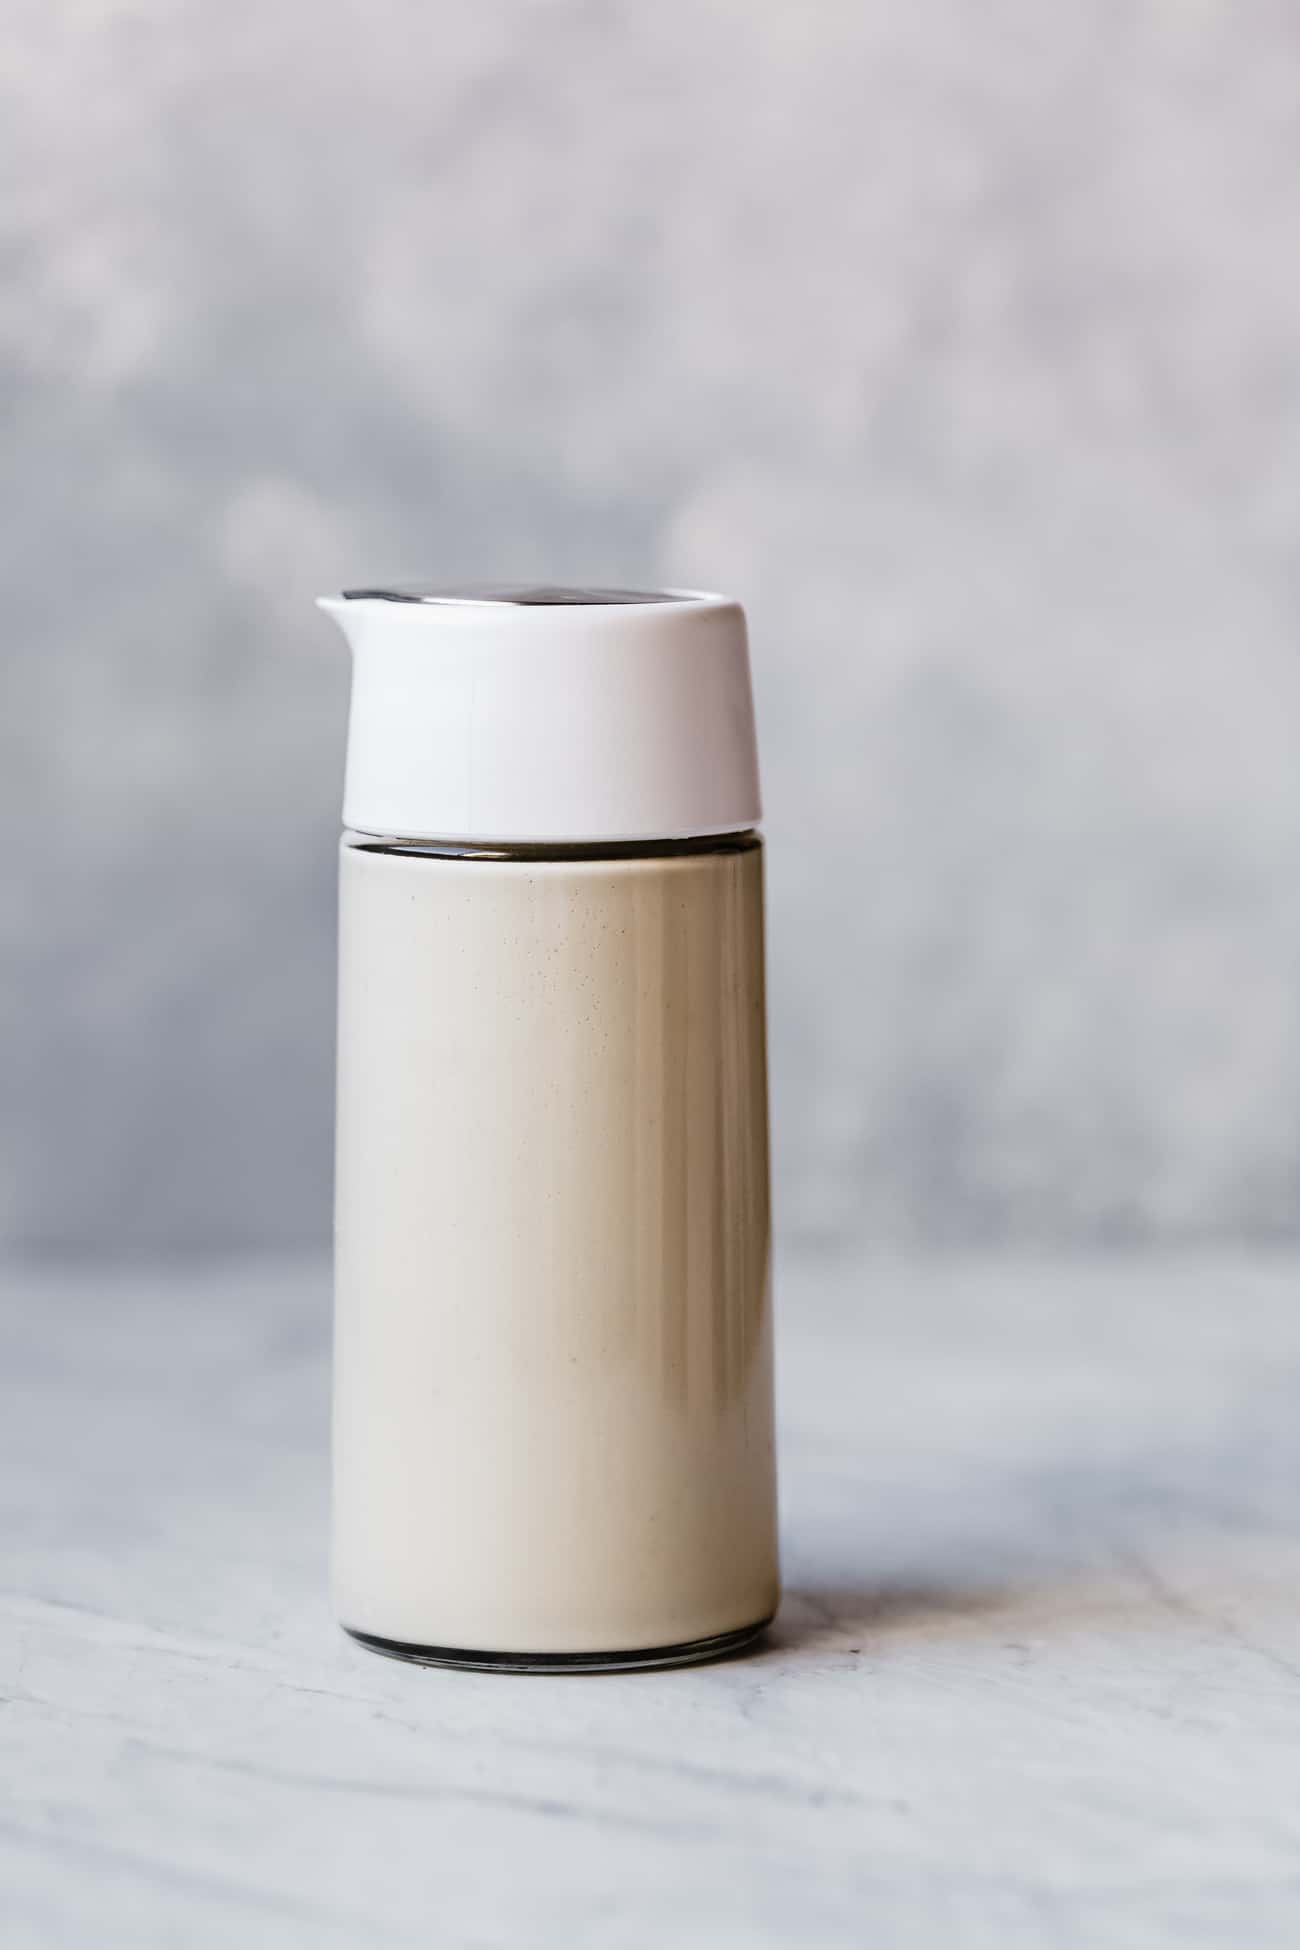 french vanilla creamer in a glass pouring vessel